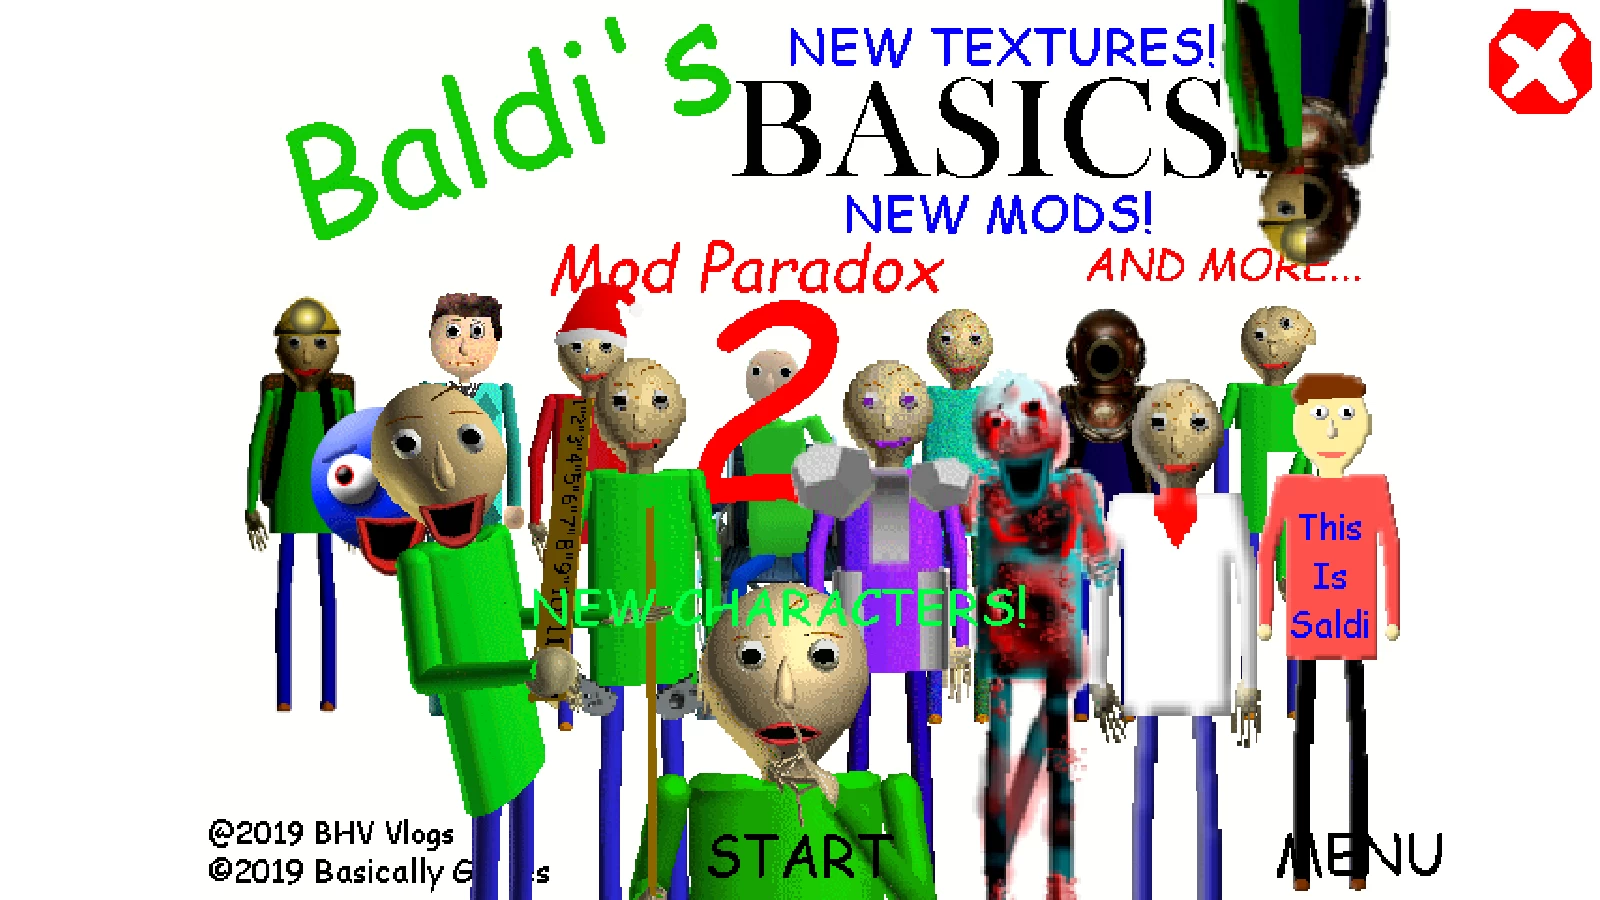 Baldis basics little bit of everything. Baldi Basics Mods. Baldi's Basics Mod Paradox. Baldi Basics in a little bit of everything. Bbialboe.